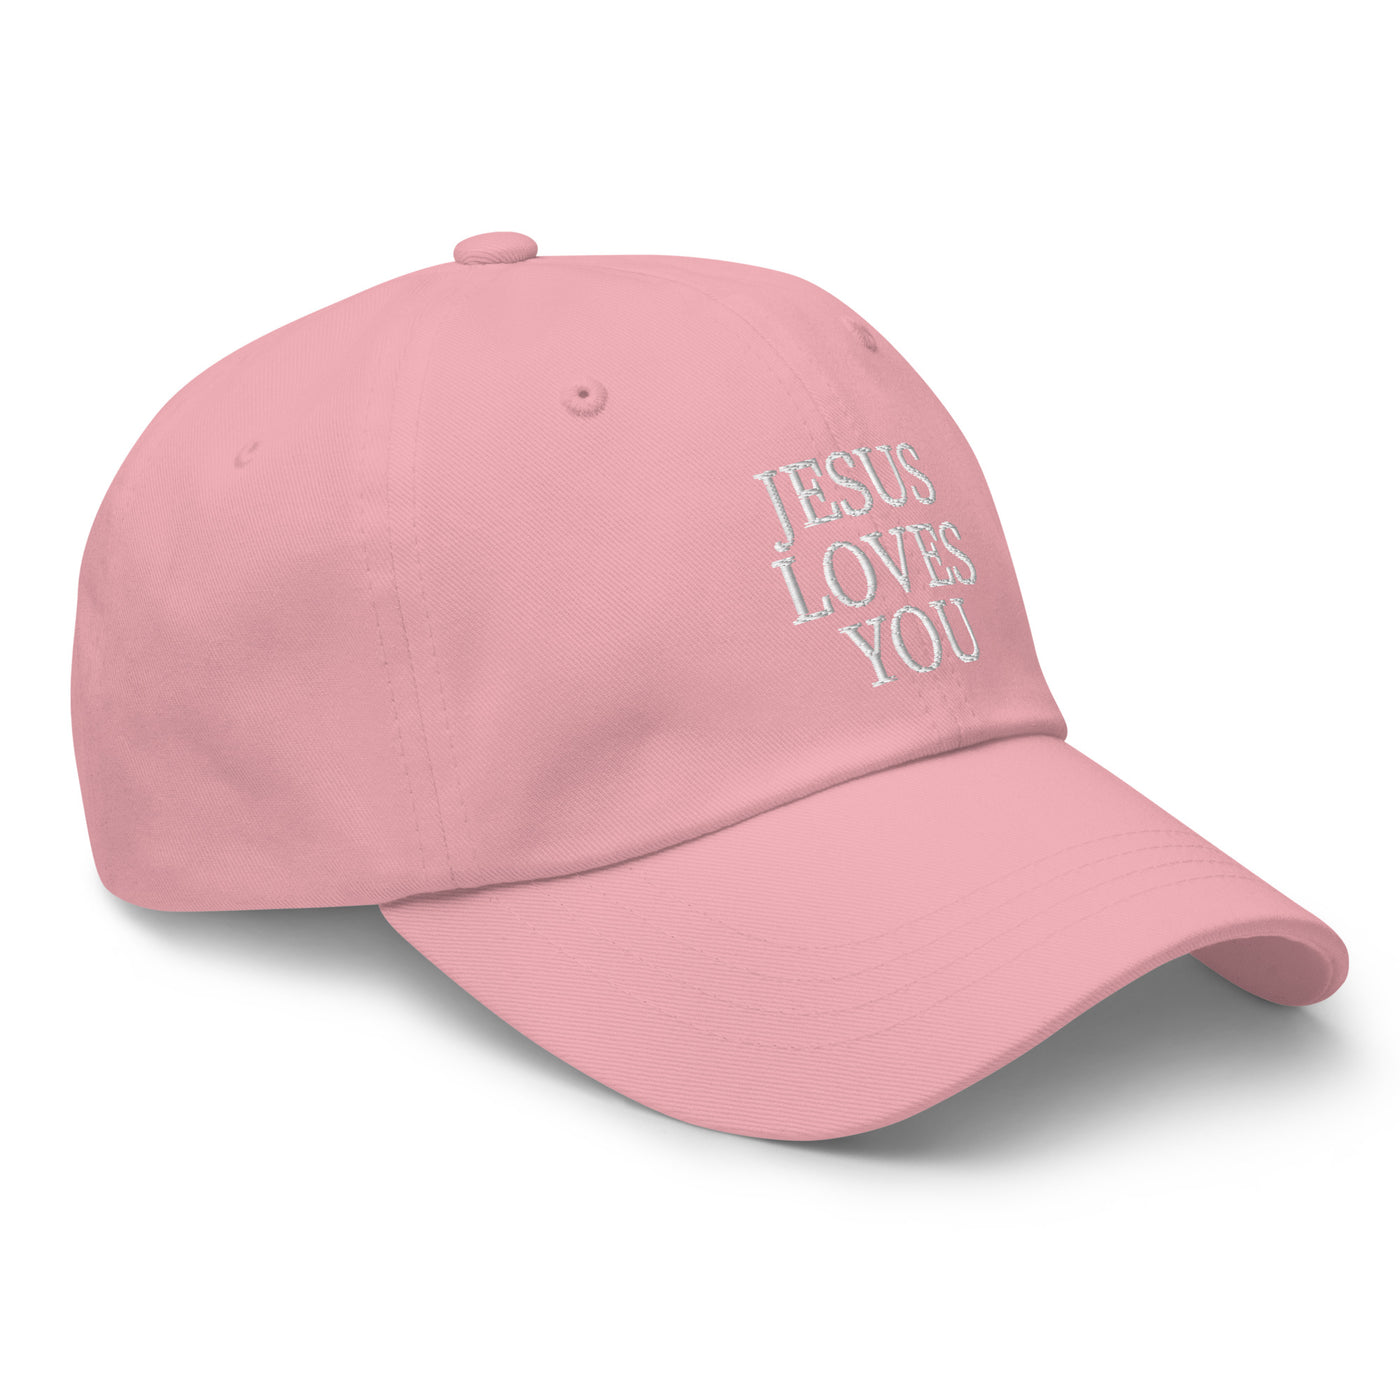 F&H Jesus Loves You Embroidered Baseball Hat